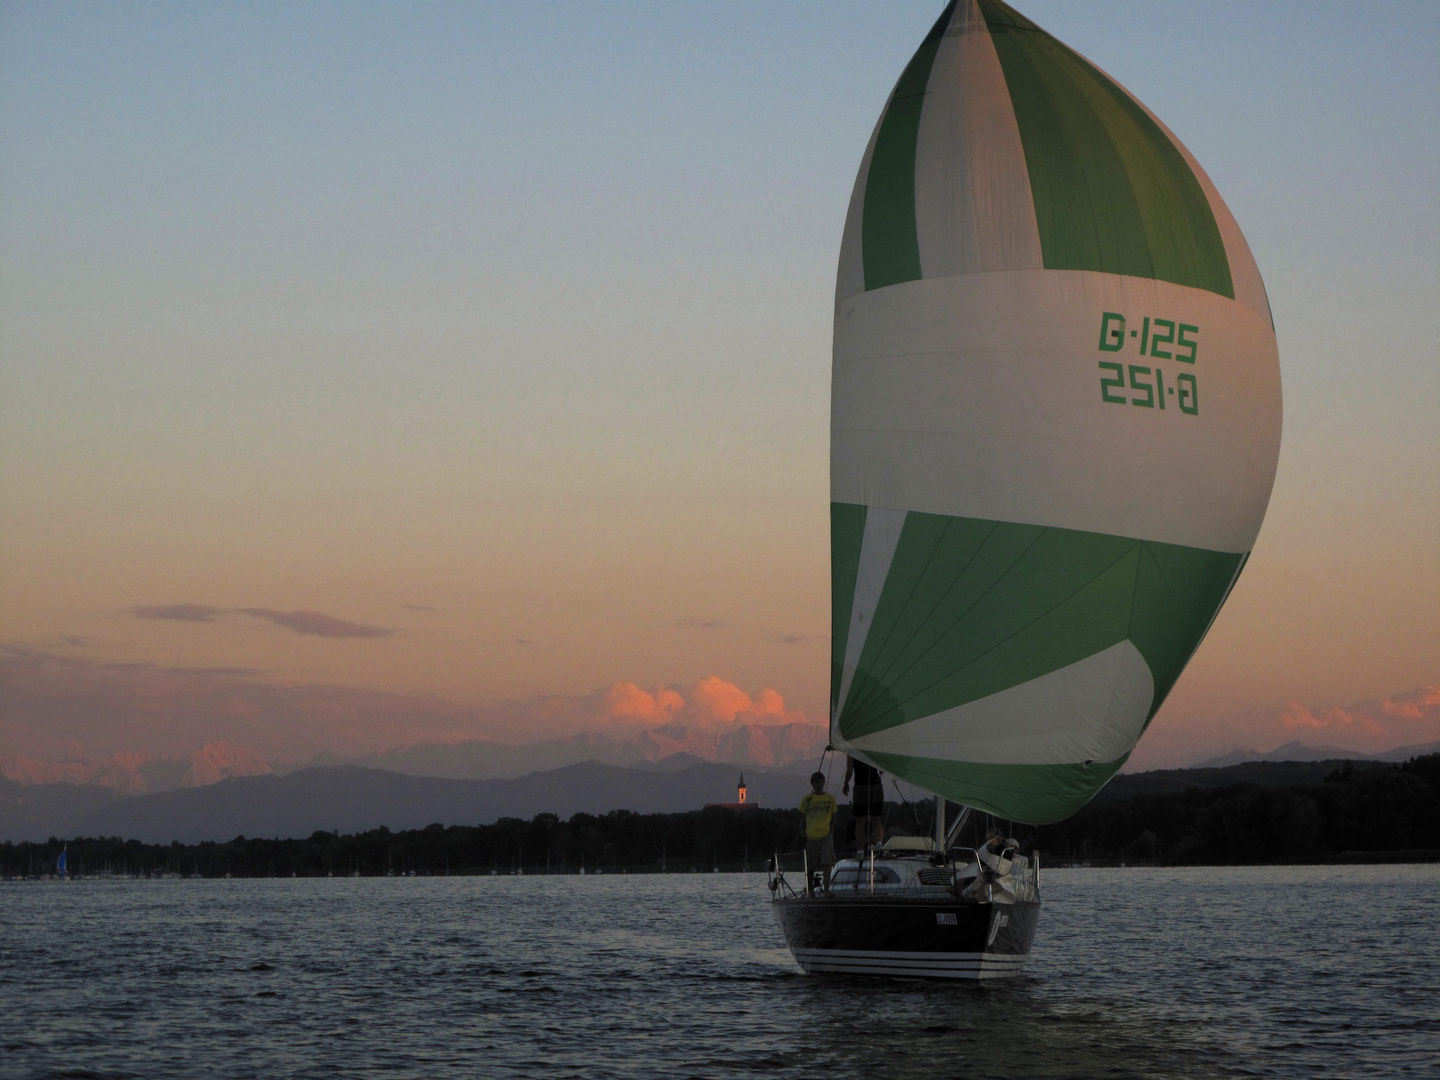 Abendrot während 24 Stunden Regatta / sunset 24hrs sailing regatta